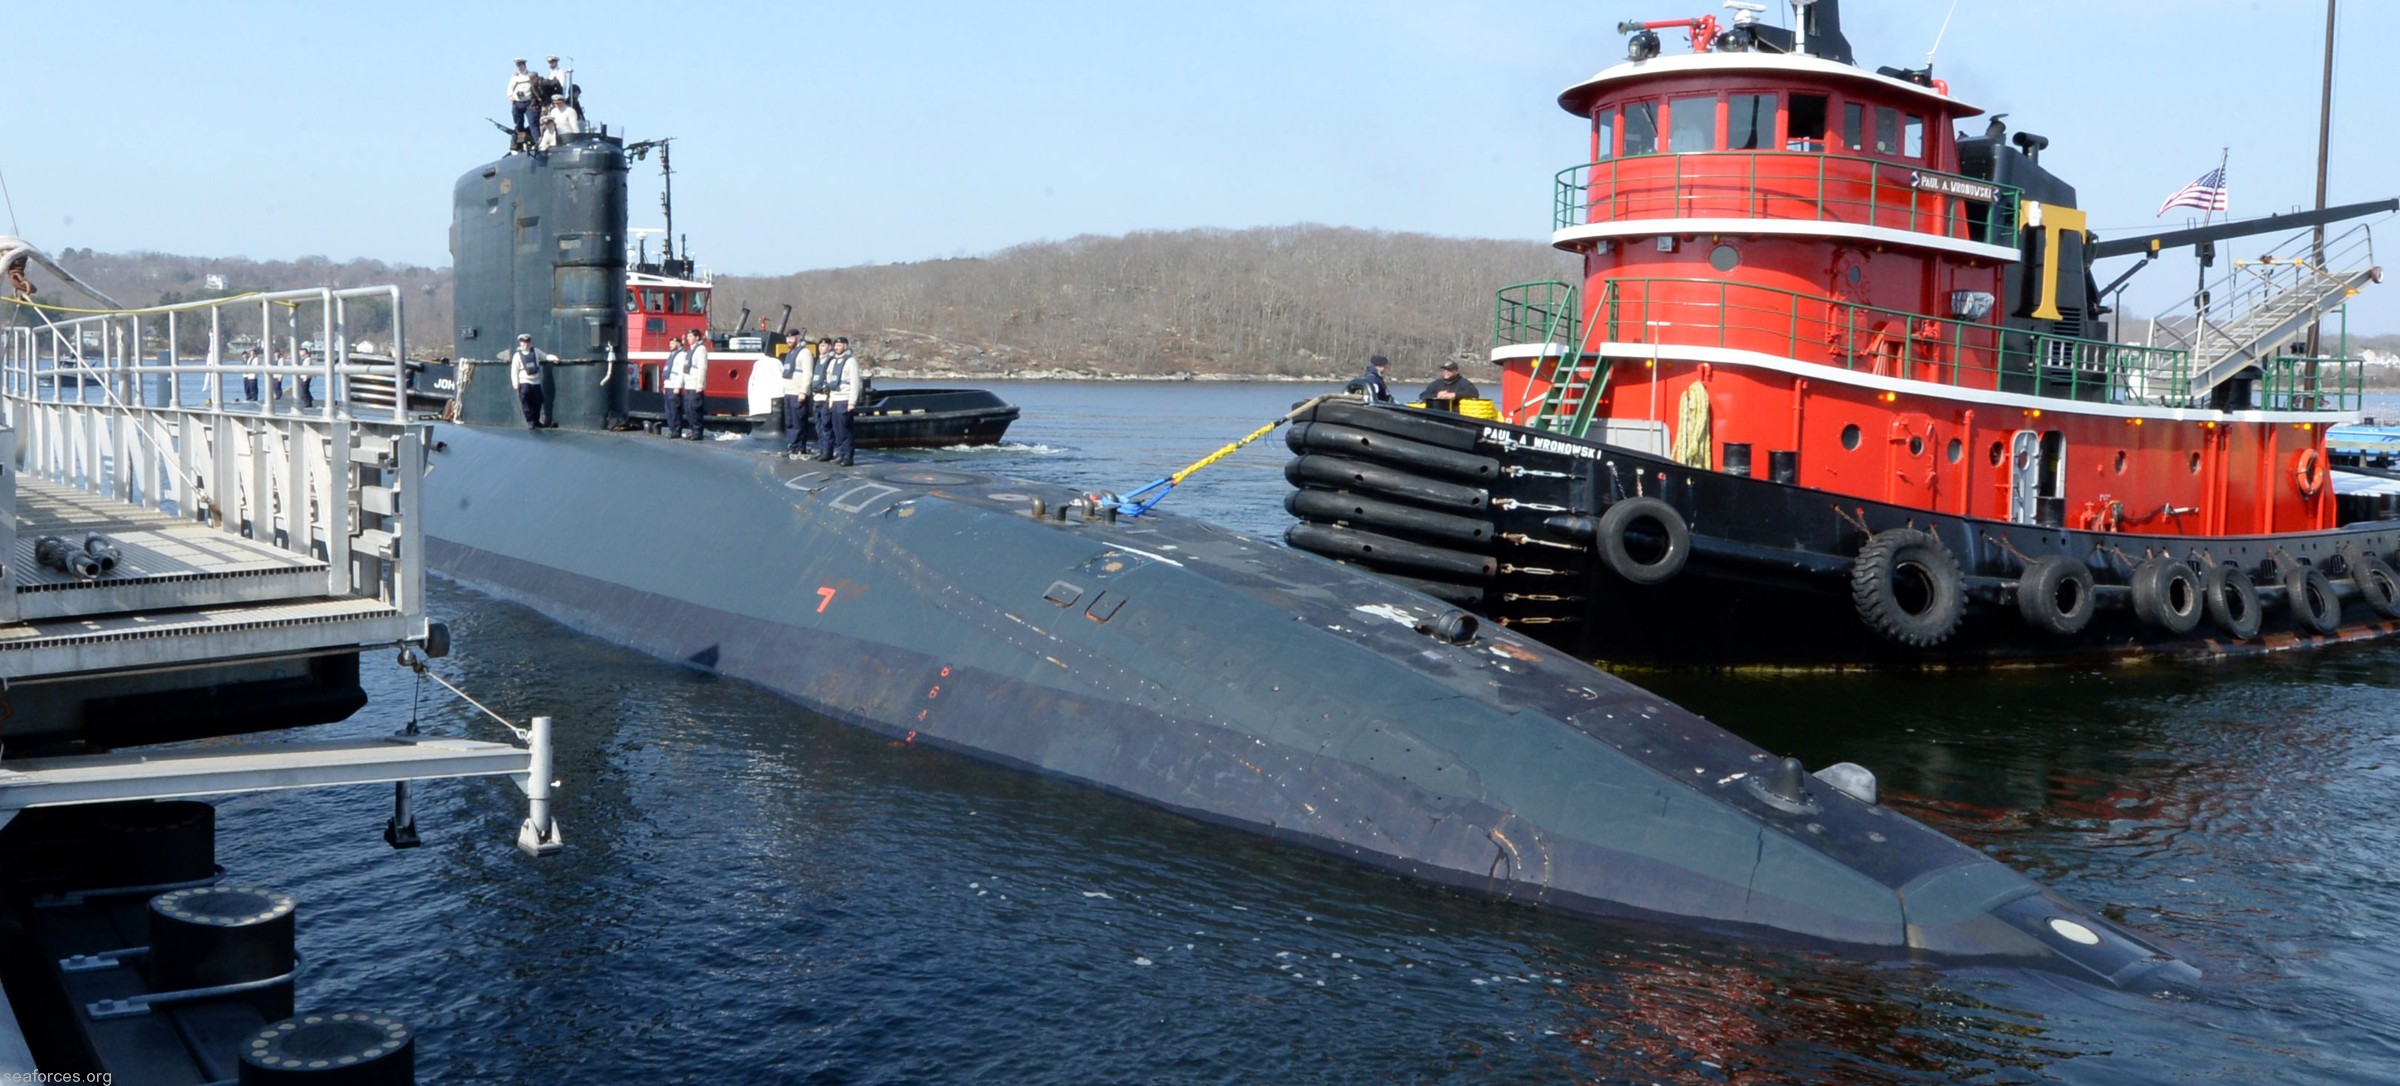 s91 hms trenchant trafalgar class attack submarine hunter killer royal navy 10